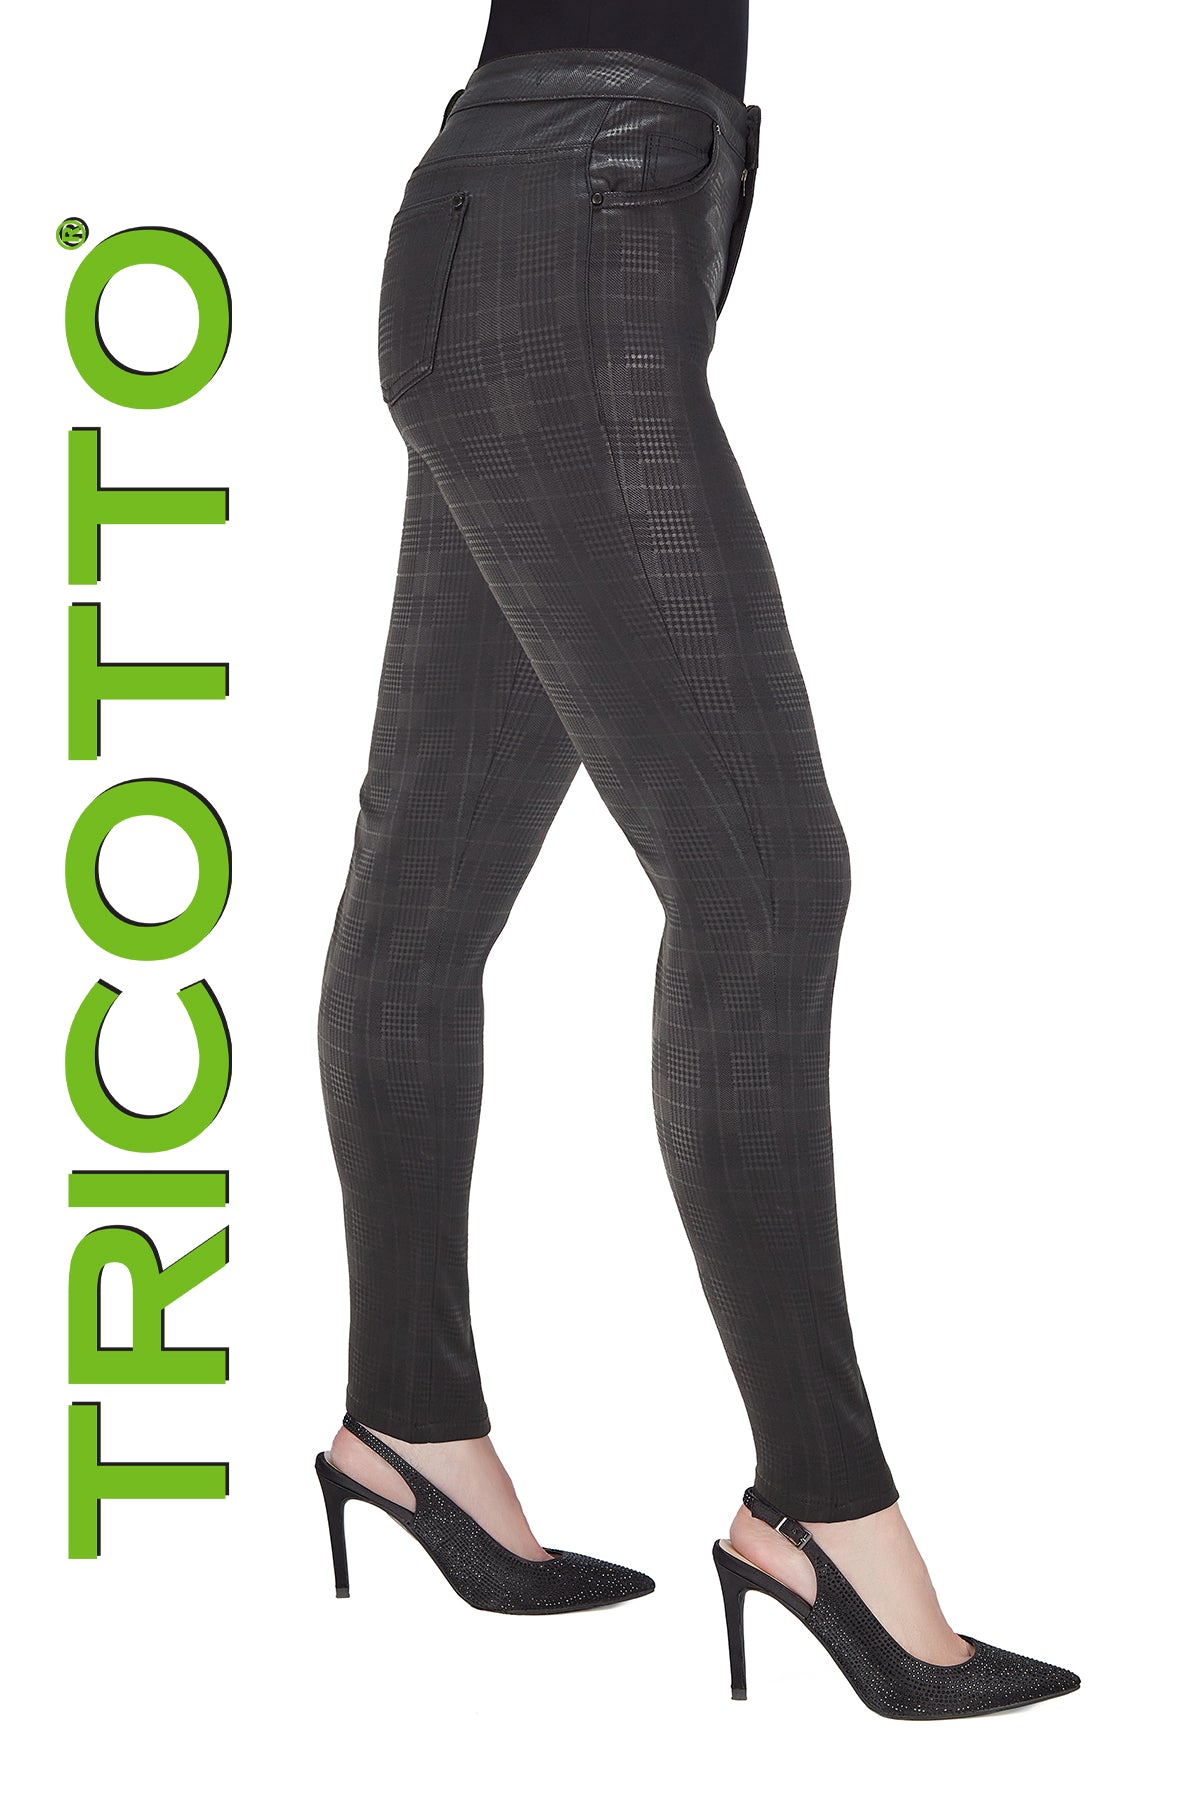 Tricotto Pants-Tricotto Black Pants-Tricotto Jeans-Women's Pants